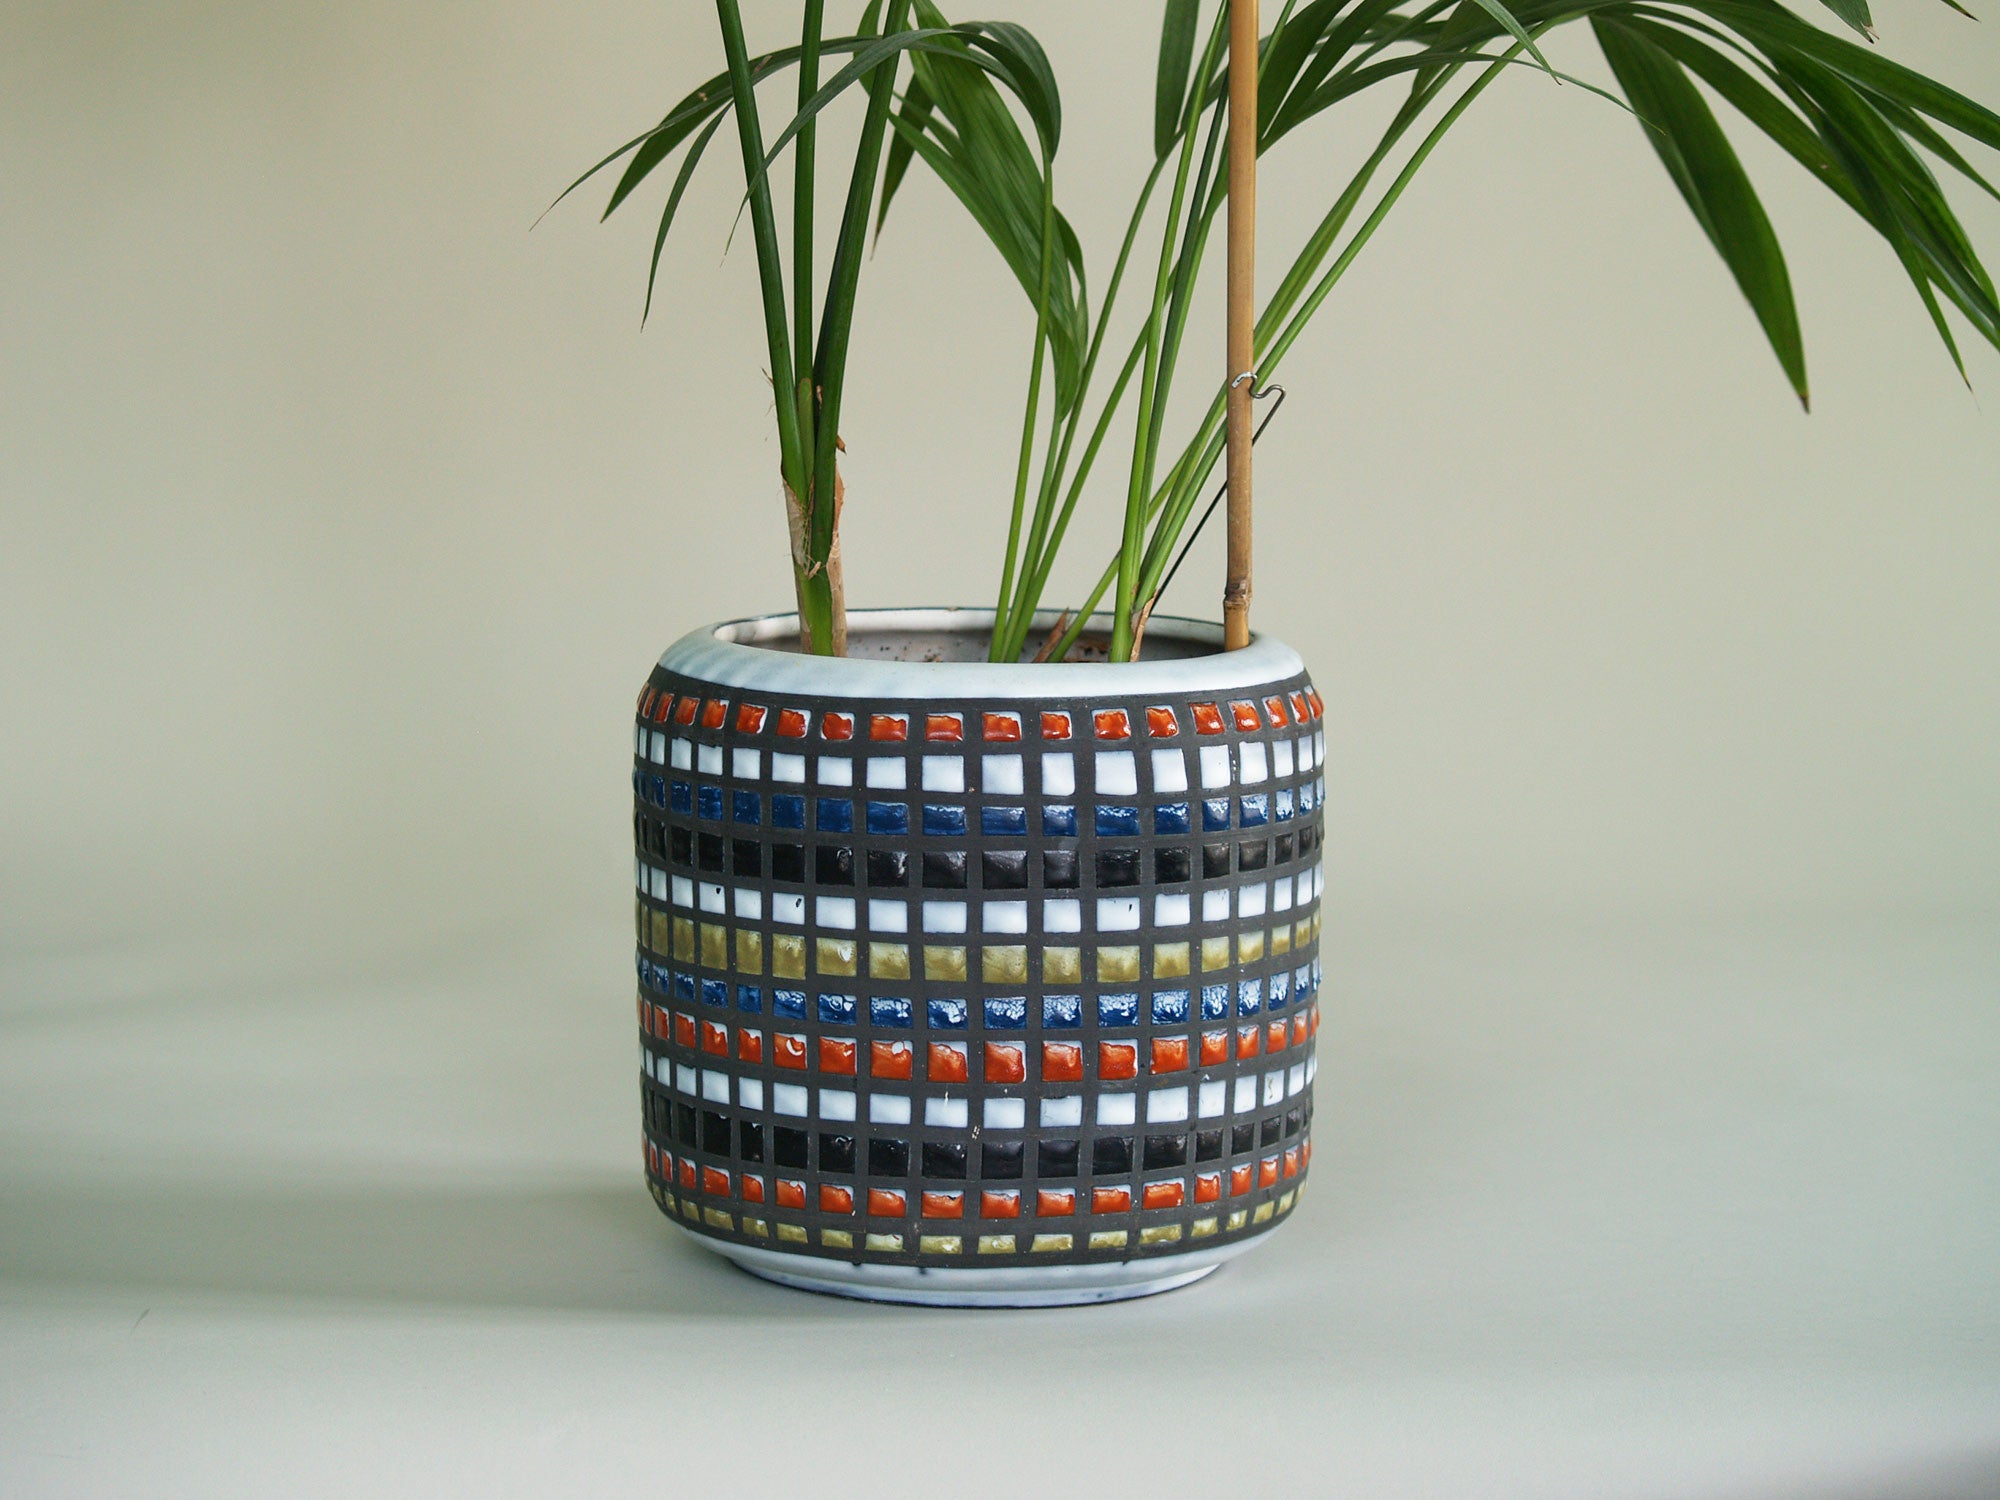 Vase / Pot de Roger Capron, France (vers 1955)..Vase / planter by Roger Capron - France (circa 1955)